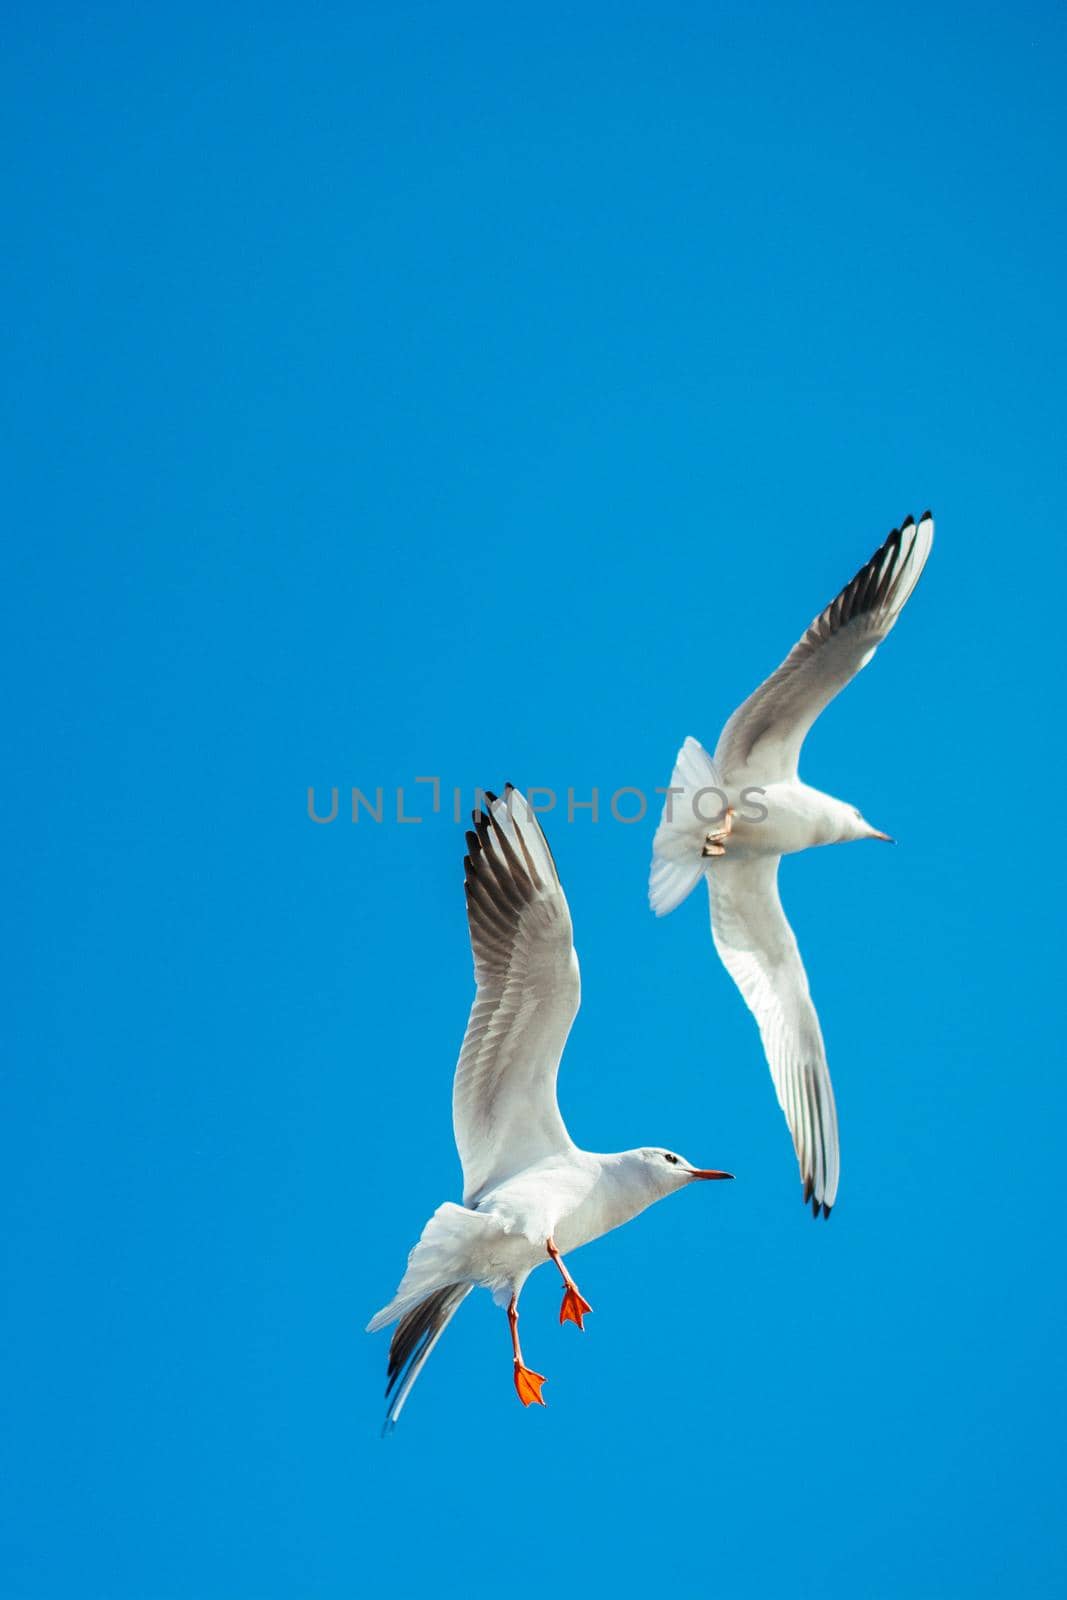 Pair of seagulls flying in the sky by berkay